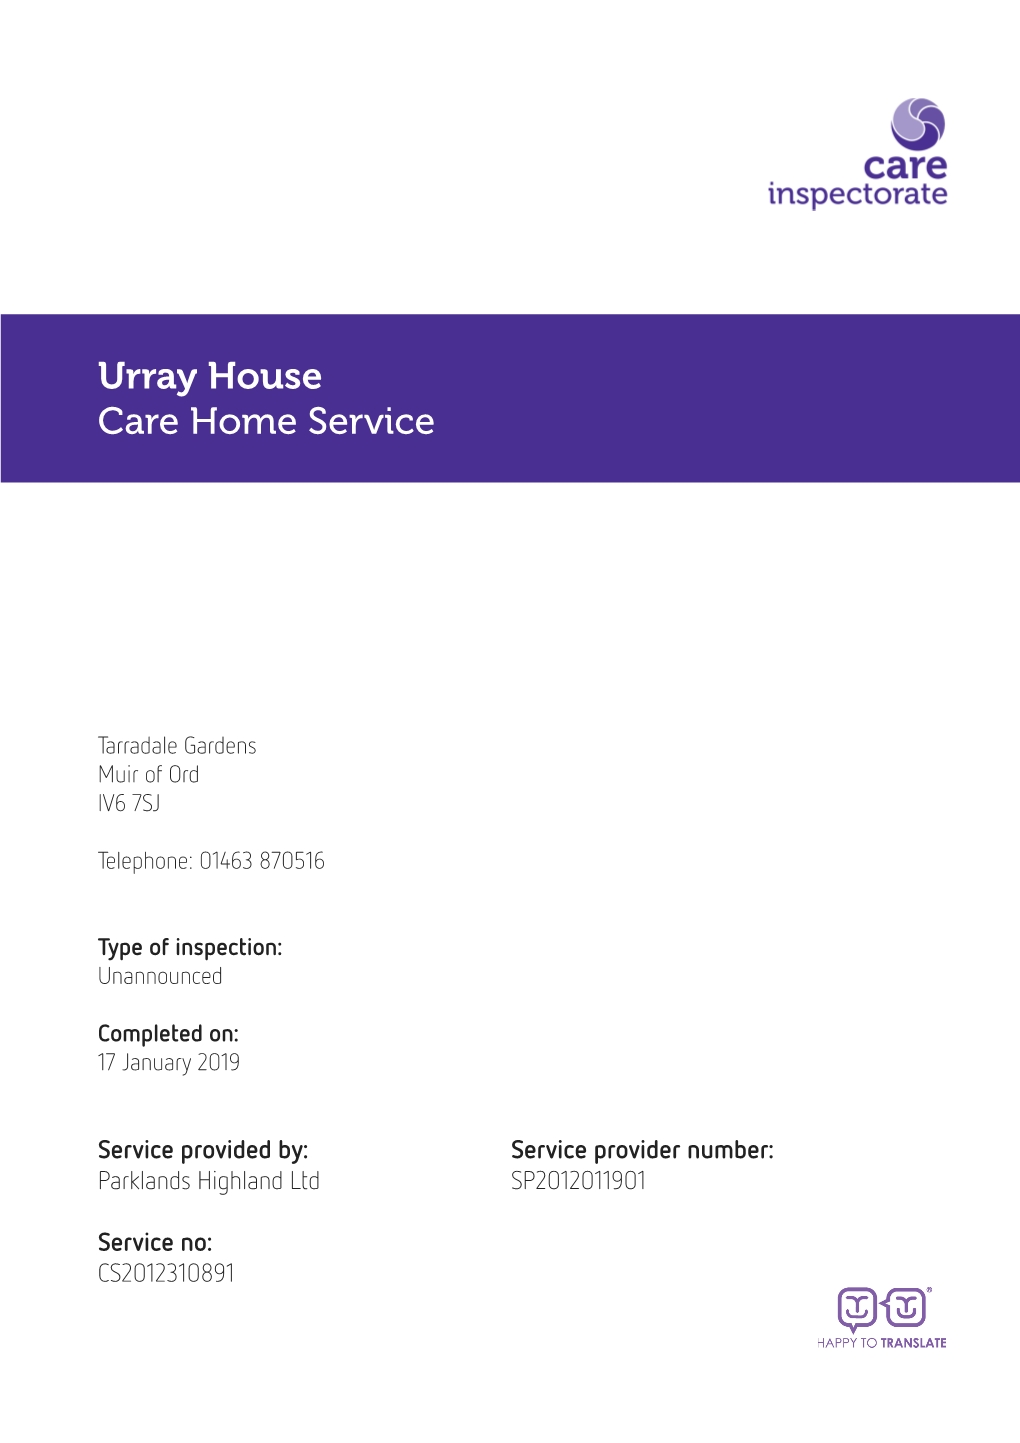 Urray House Care Home Service